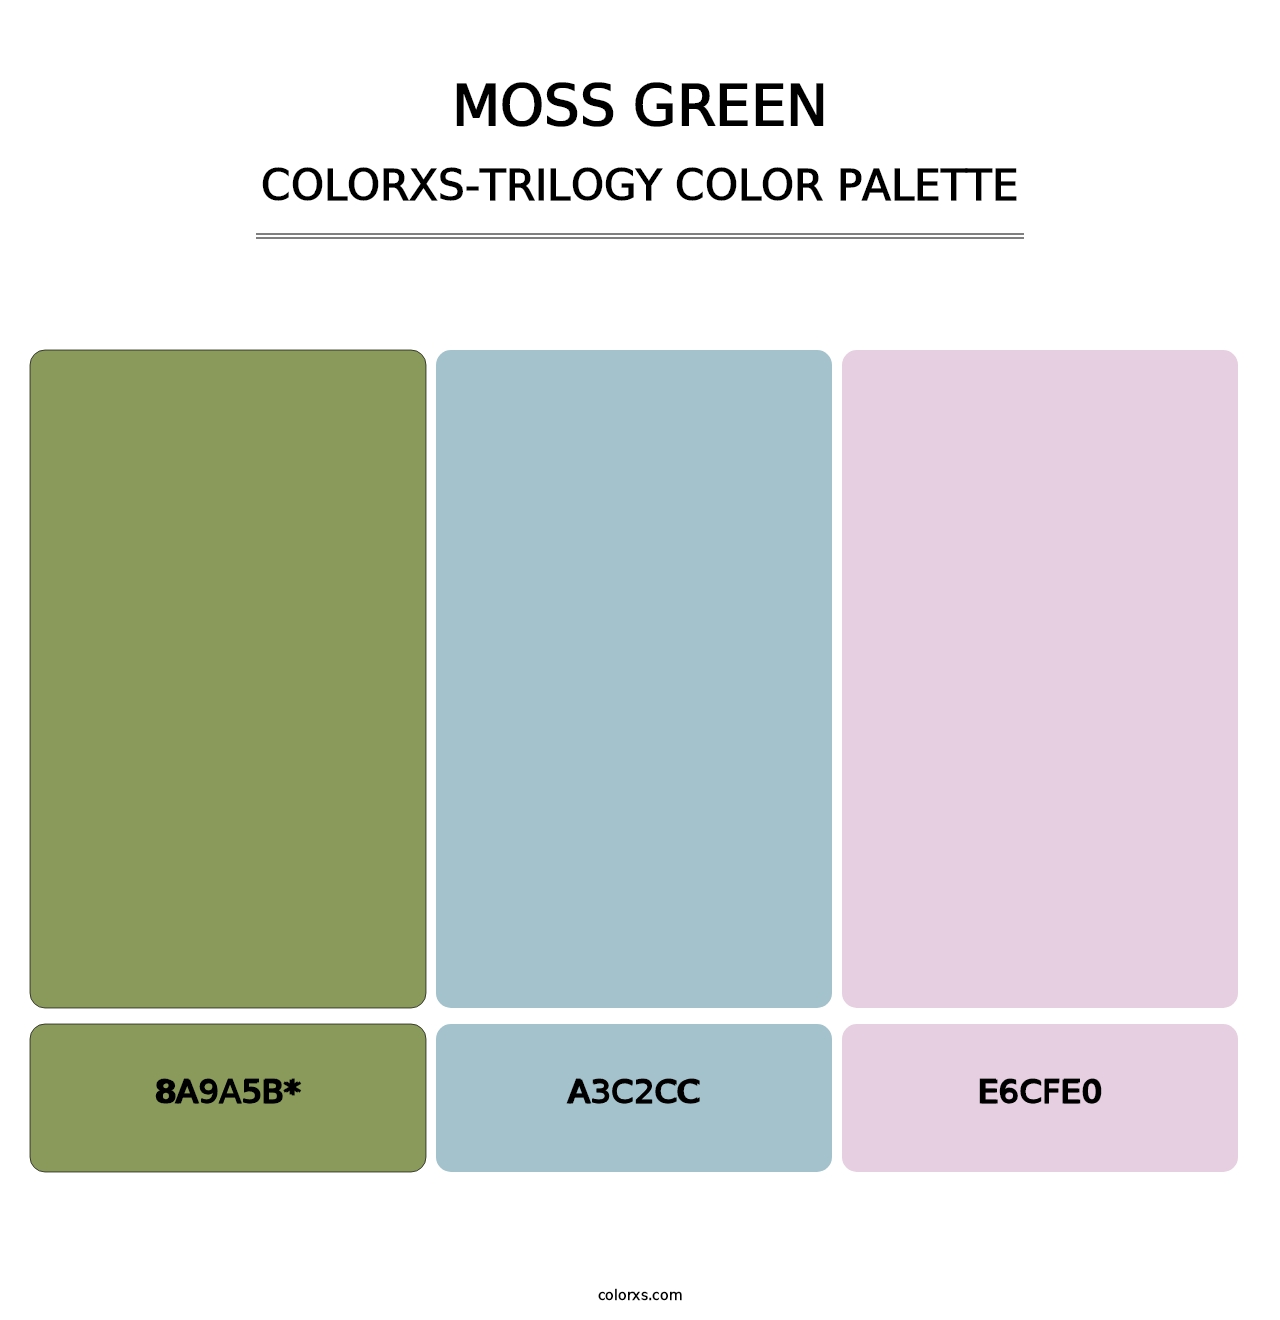 Moss Green - Colorxs Trilogy Palette